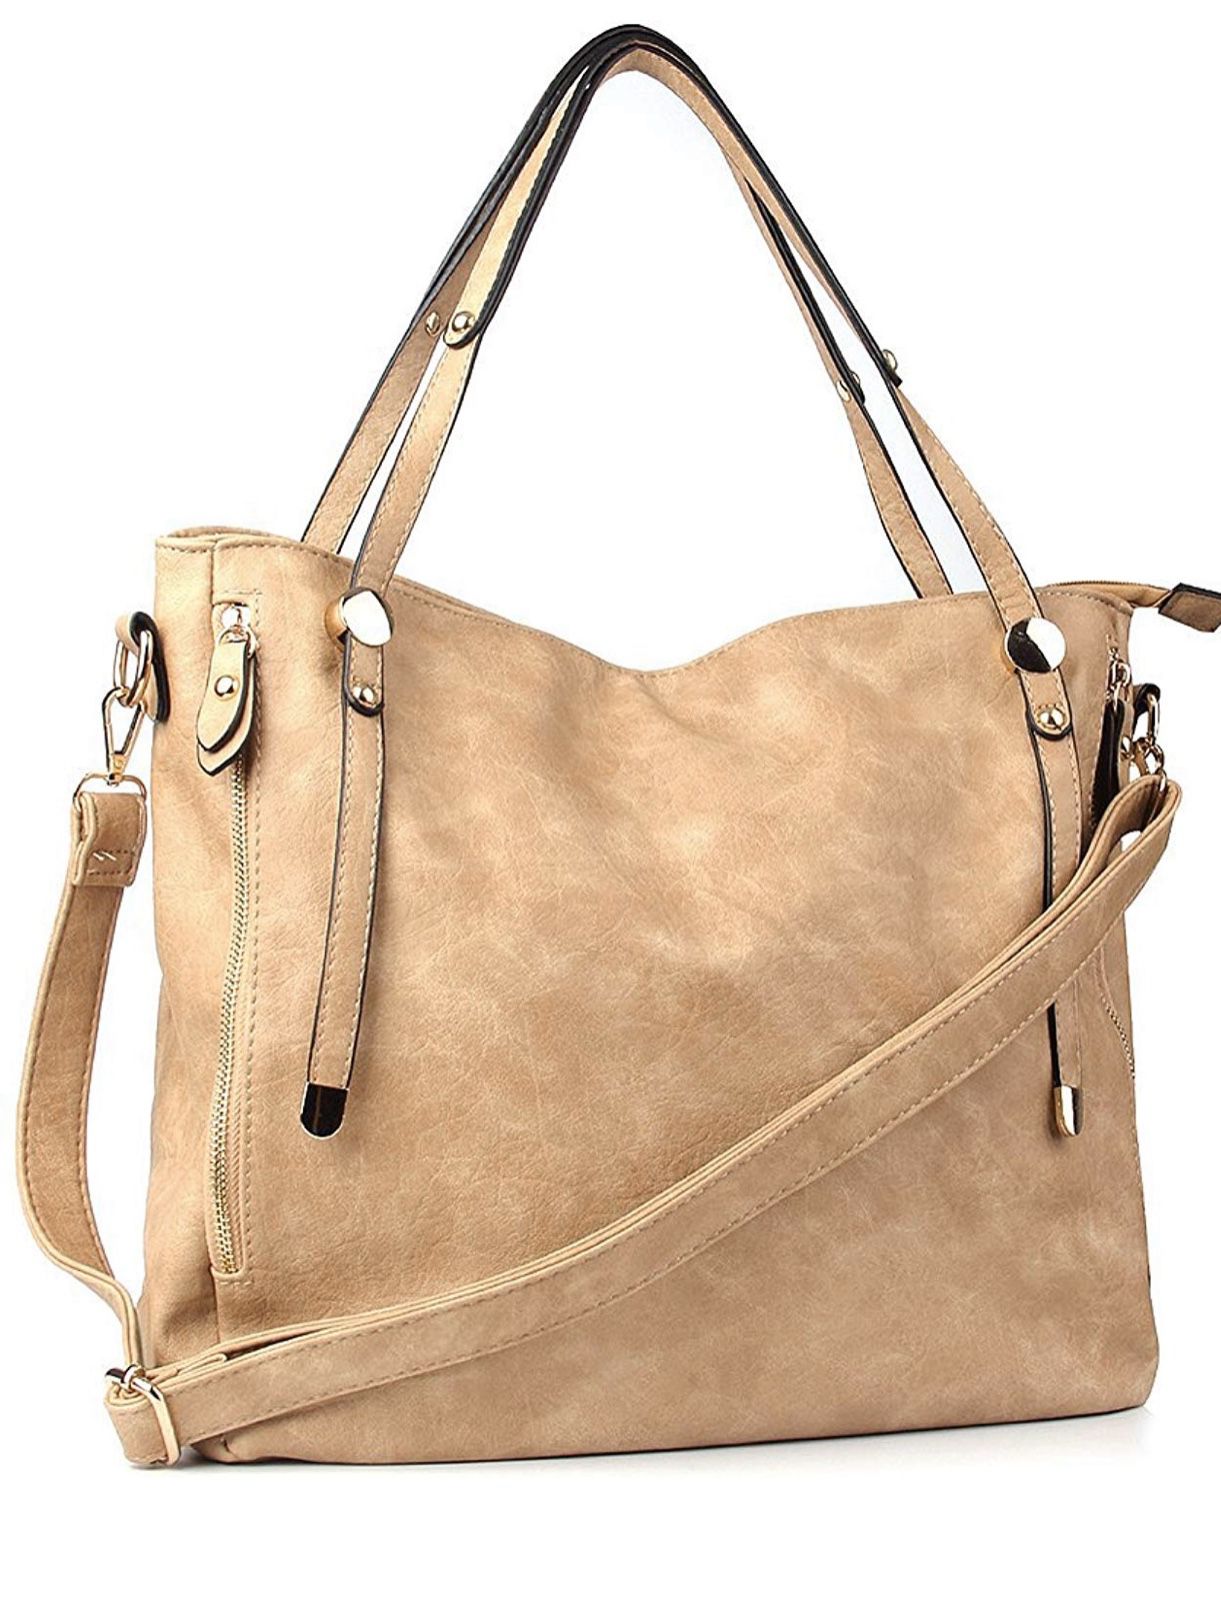 Handbags Tote Shoulder Bag, Crossbody